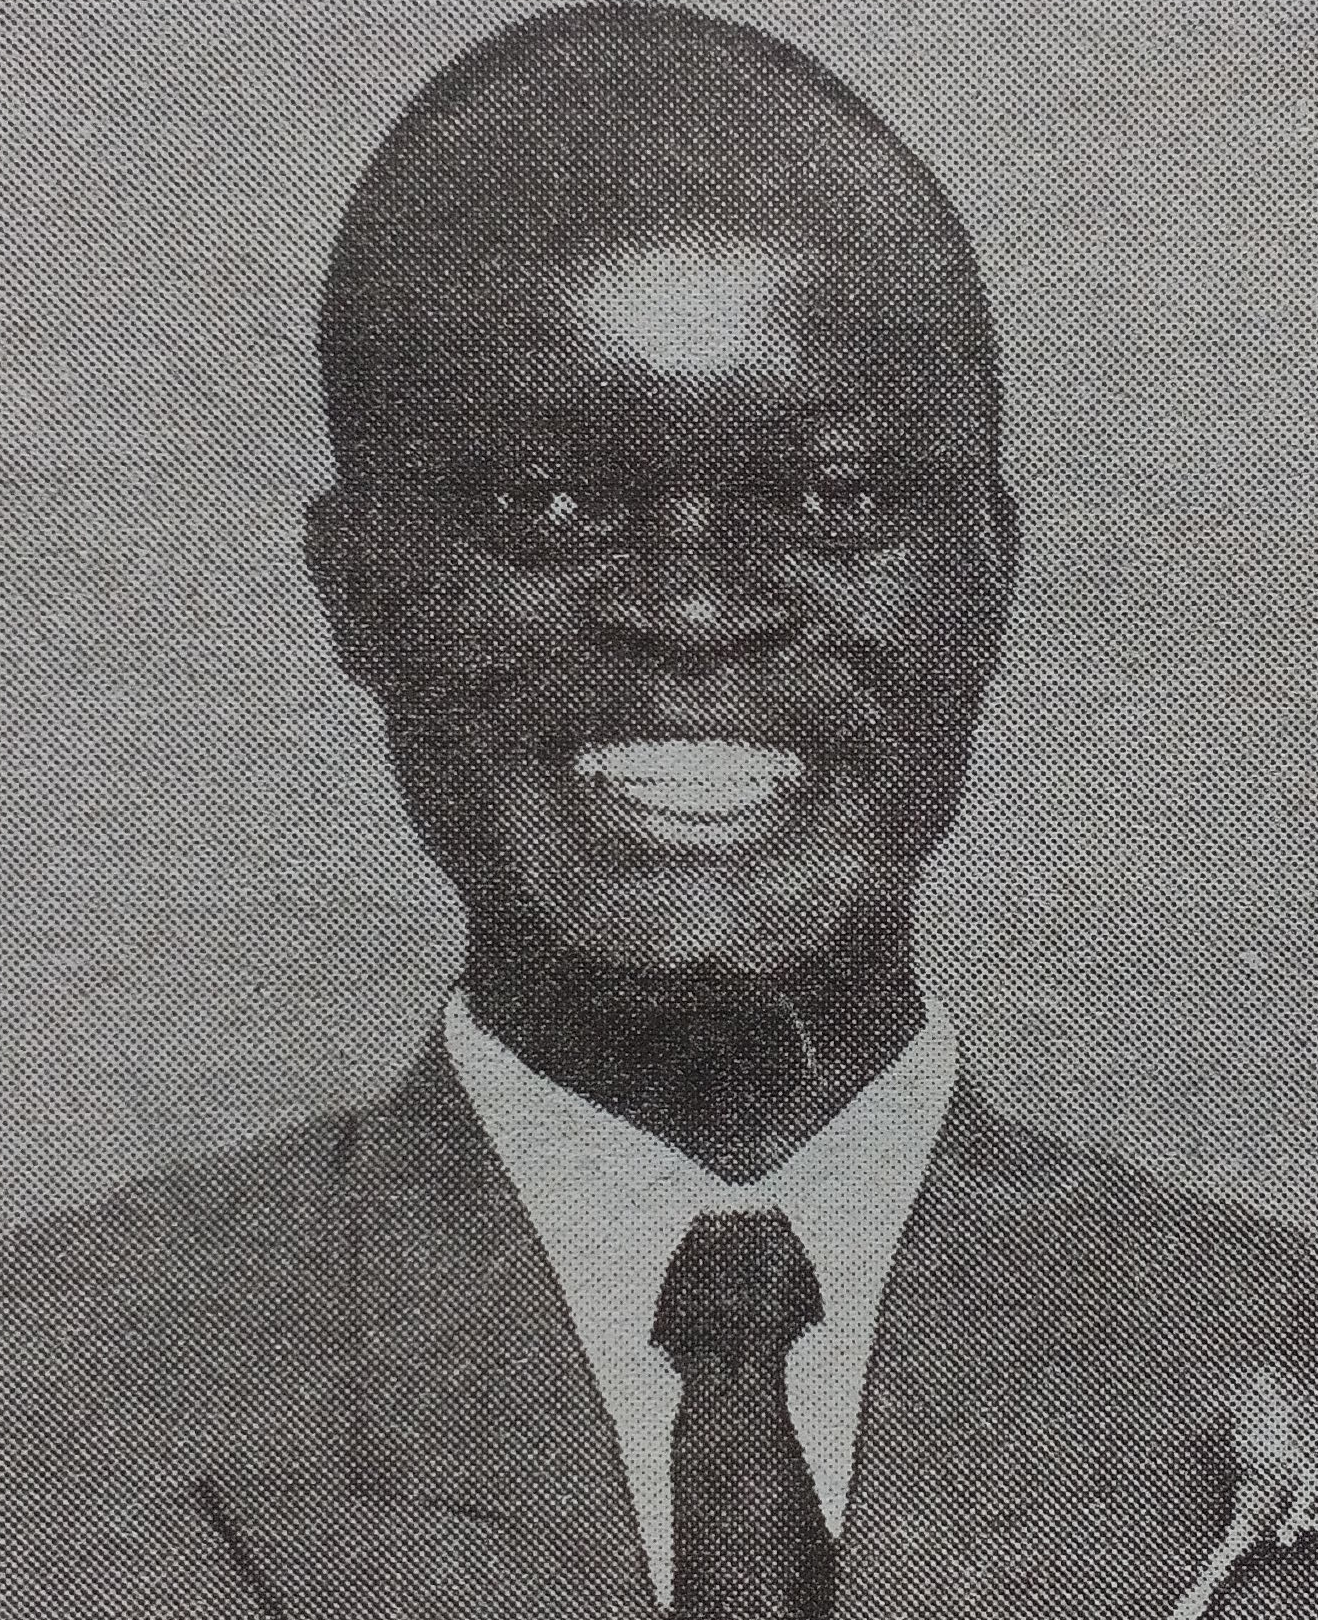 Obituary Image of David Lubanga